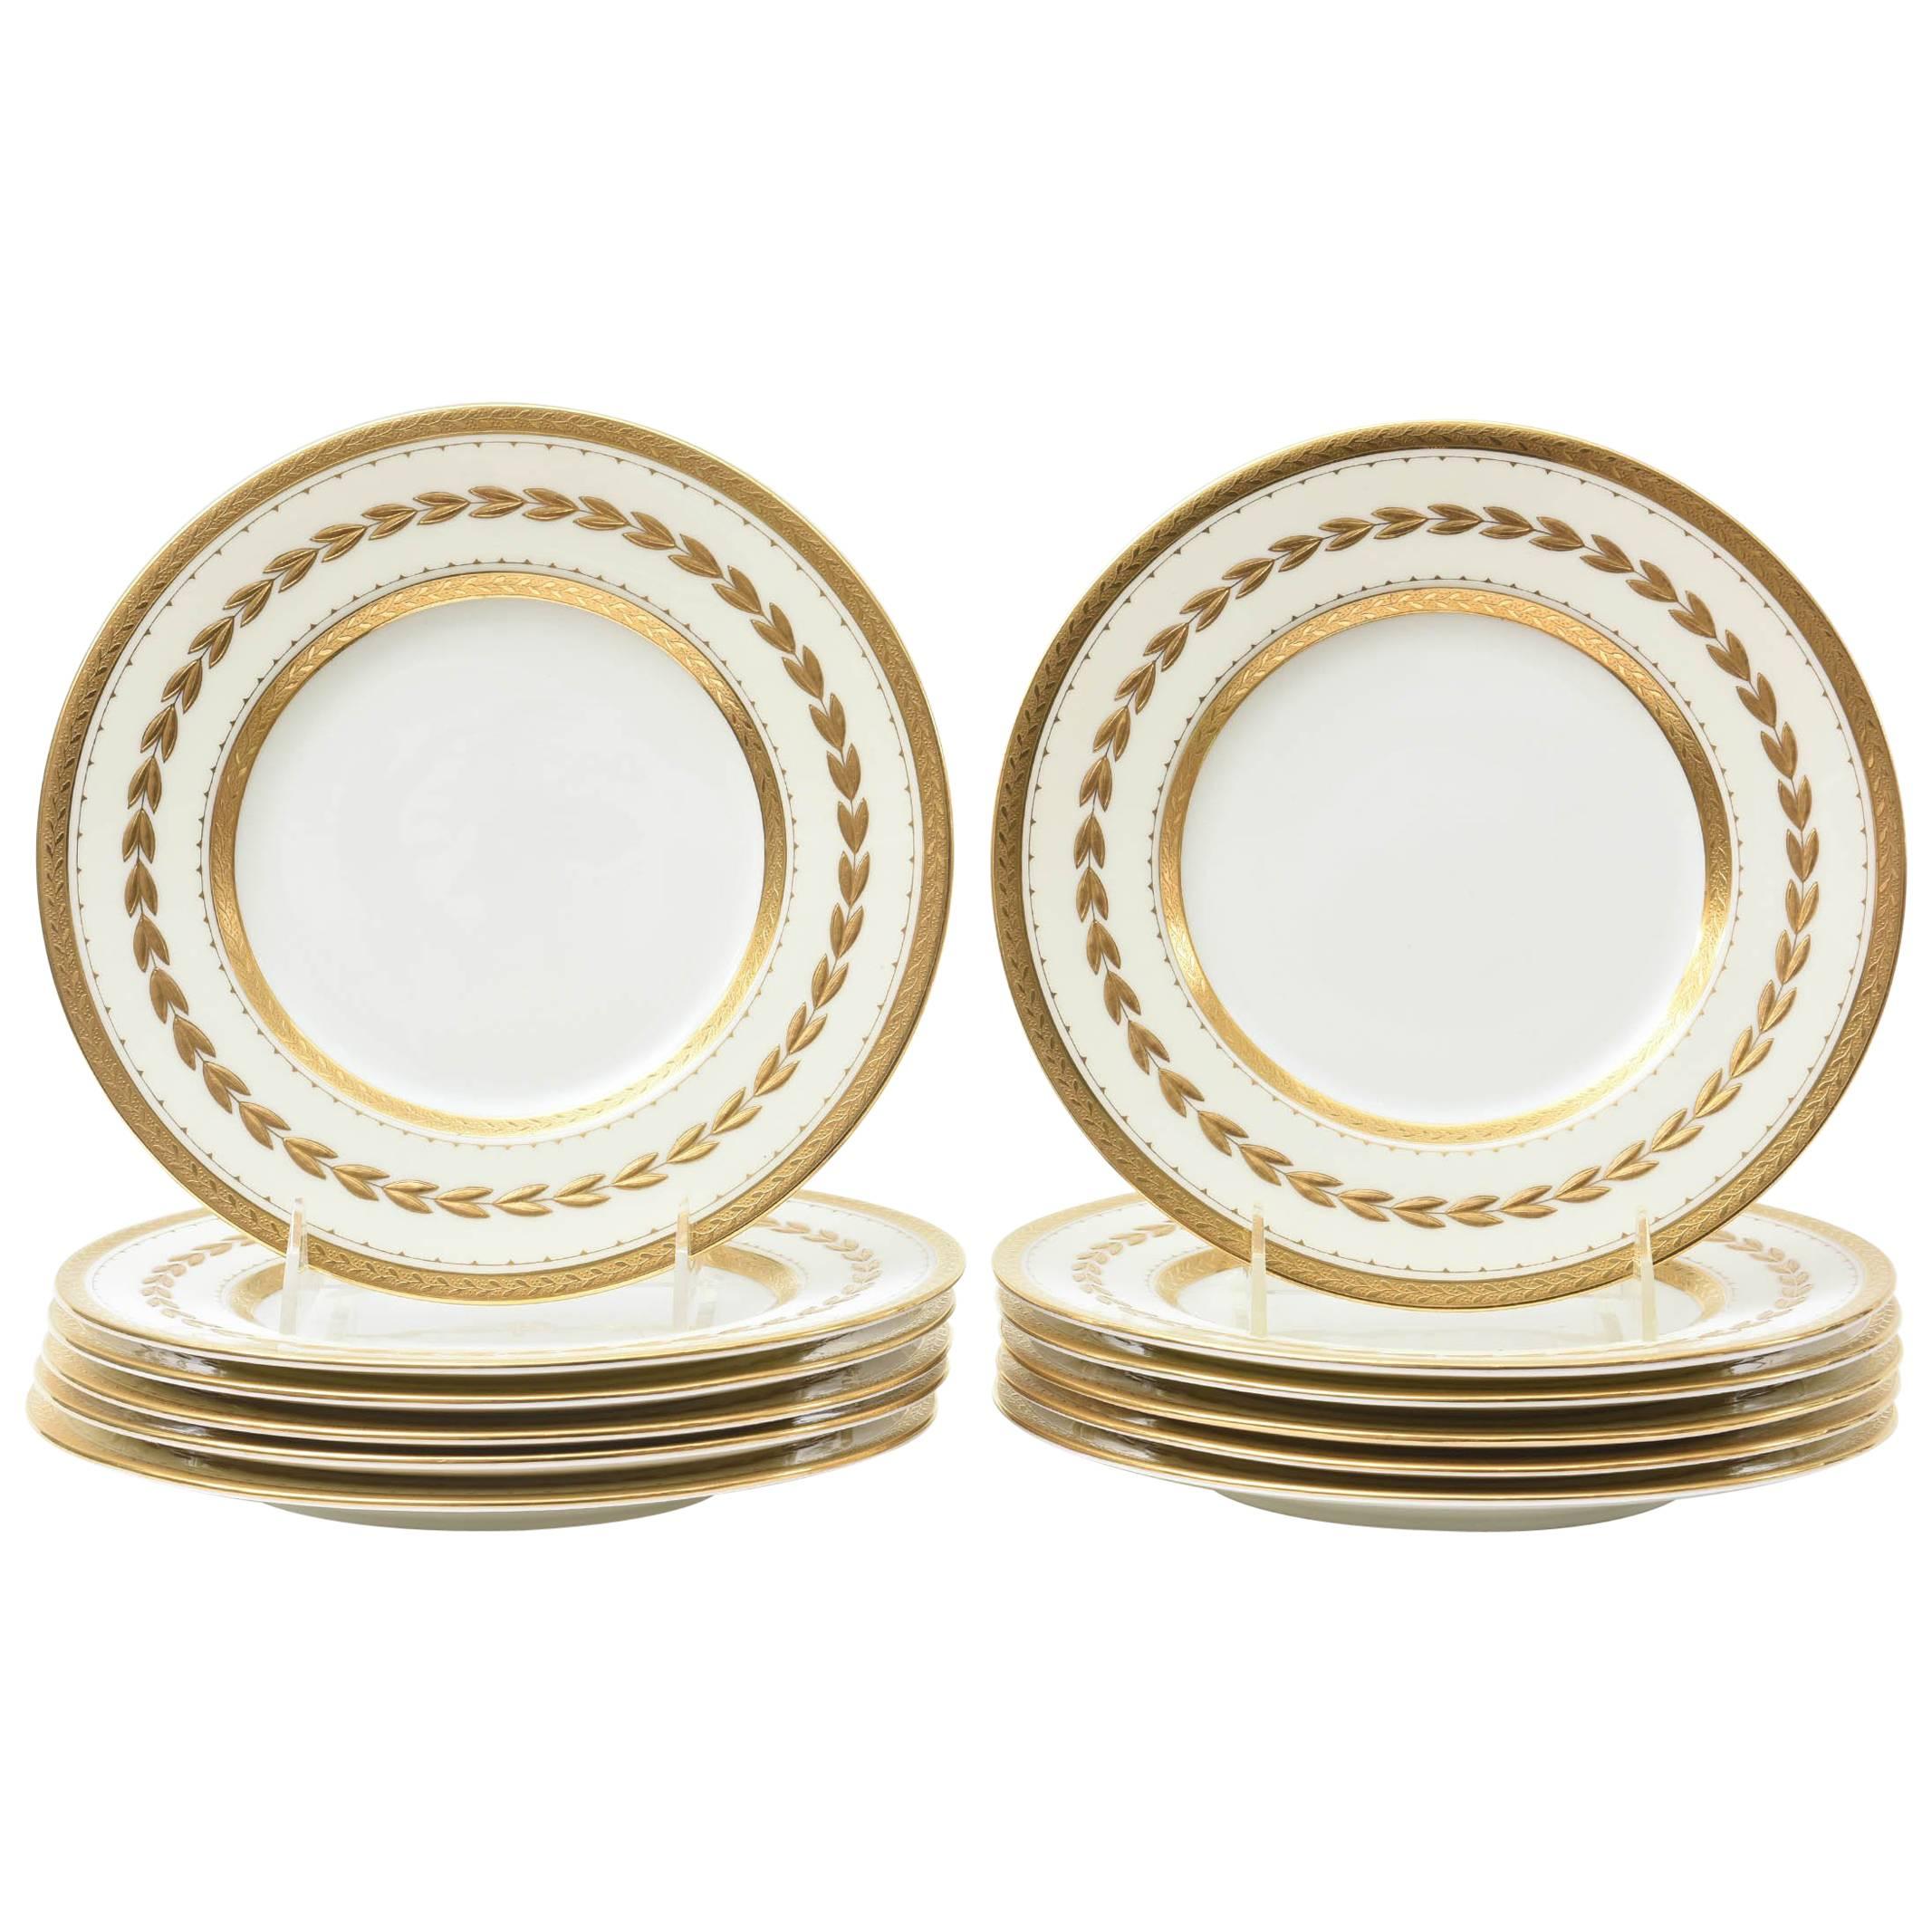 12 Tiffany Heavy Raised Gold Dessert or Salad Porcelain Plates, Antique English